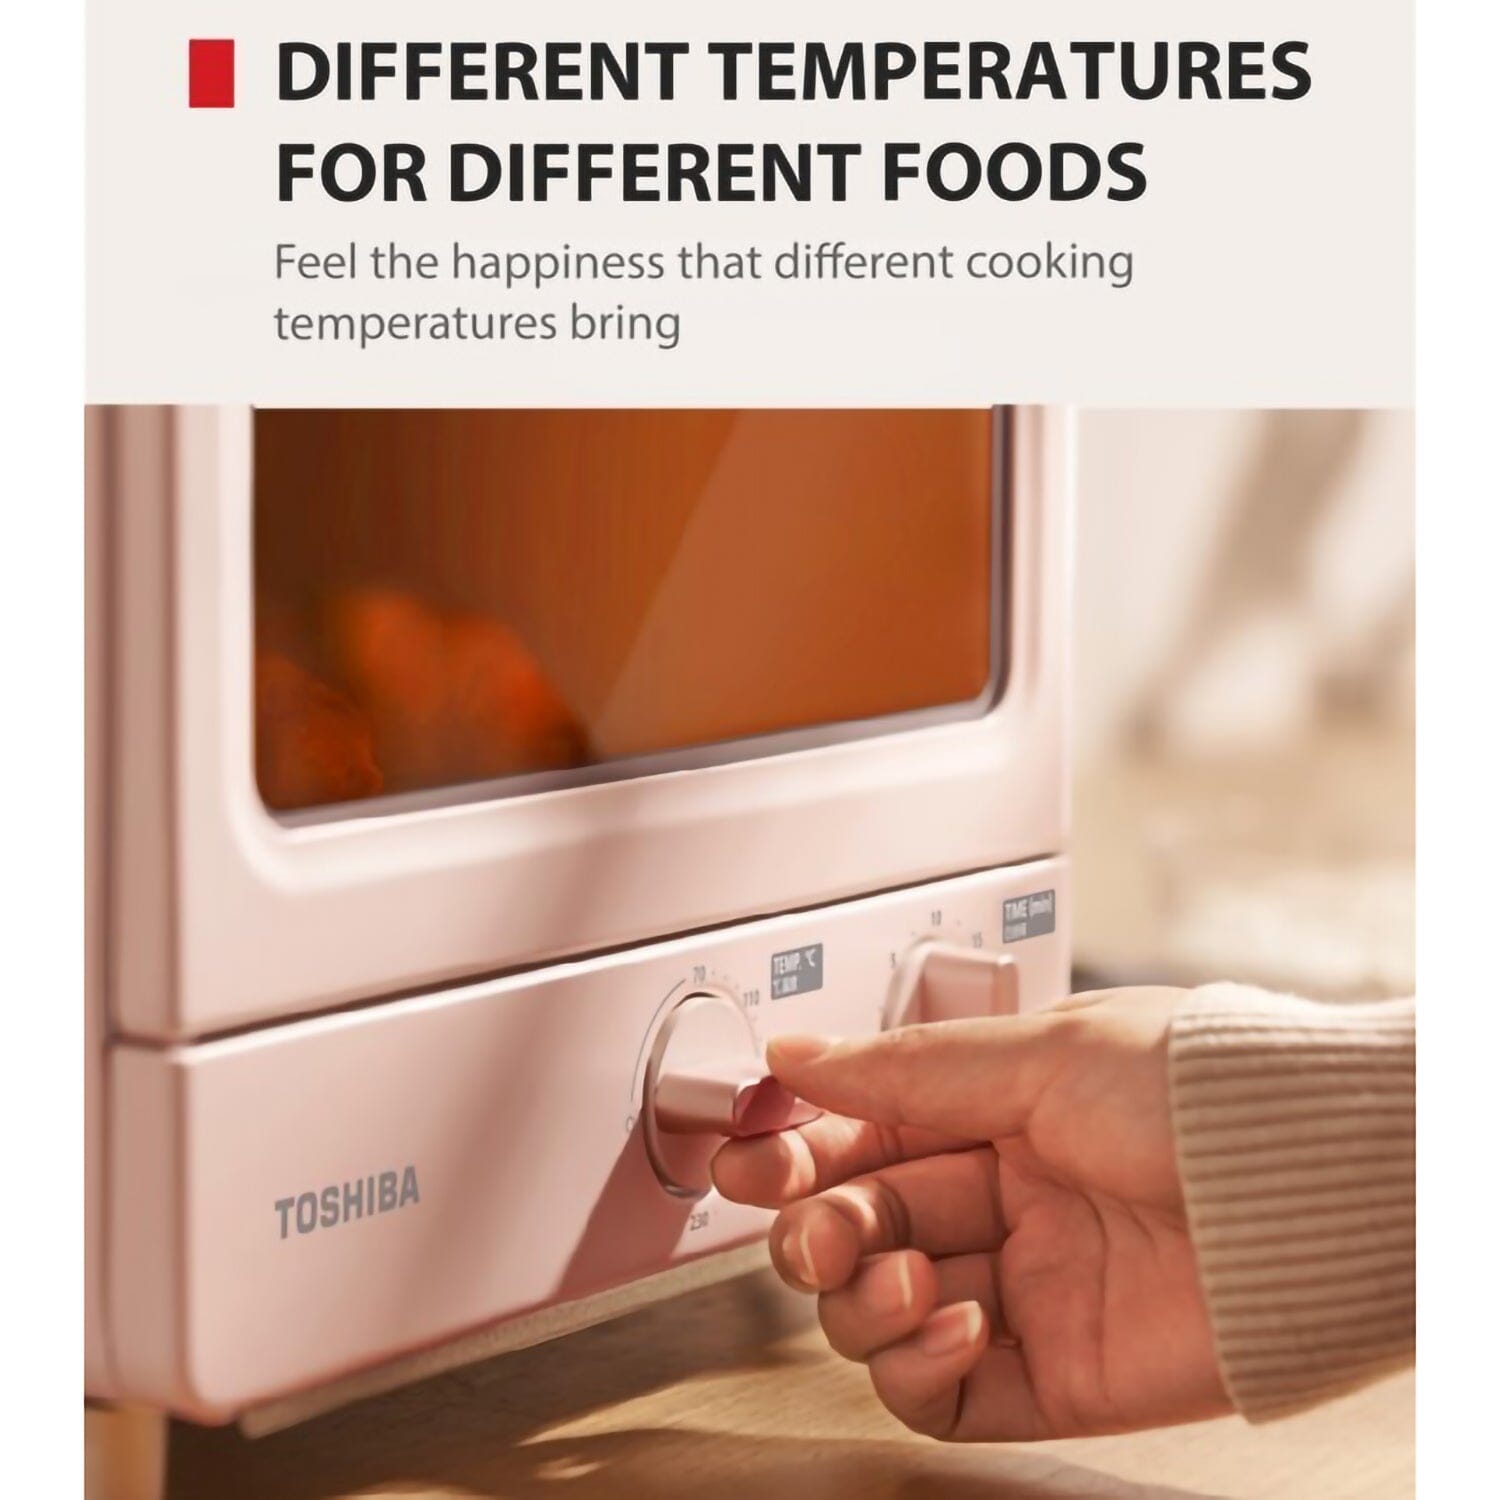 Toshiba 8L Quick Heating Toaster,Pink,ET-TD7080(PN) Toshiba 